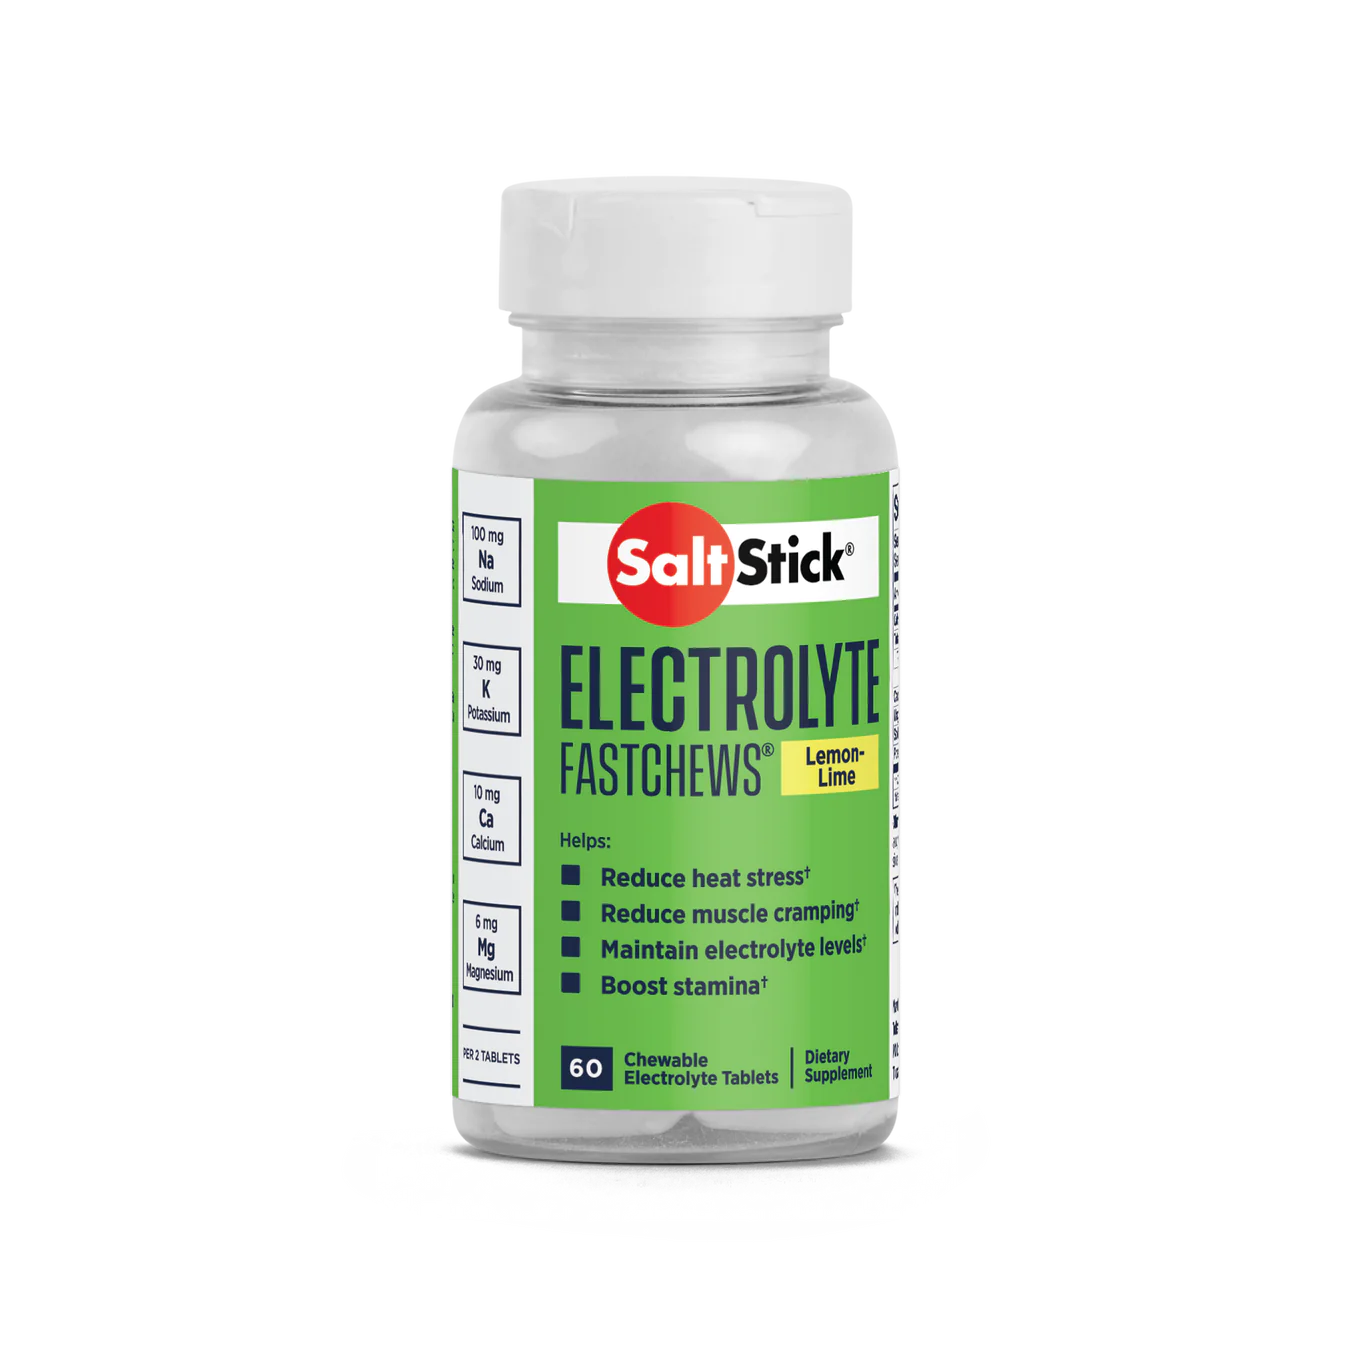 SaltStick Electrolyte FastChews Lemon Lime 60ct - 03-2060